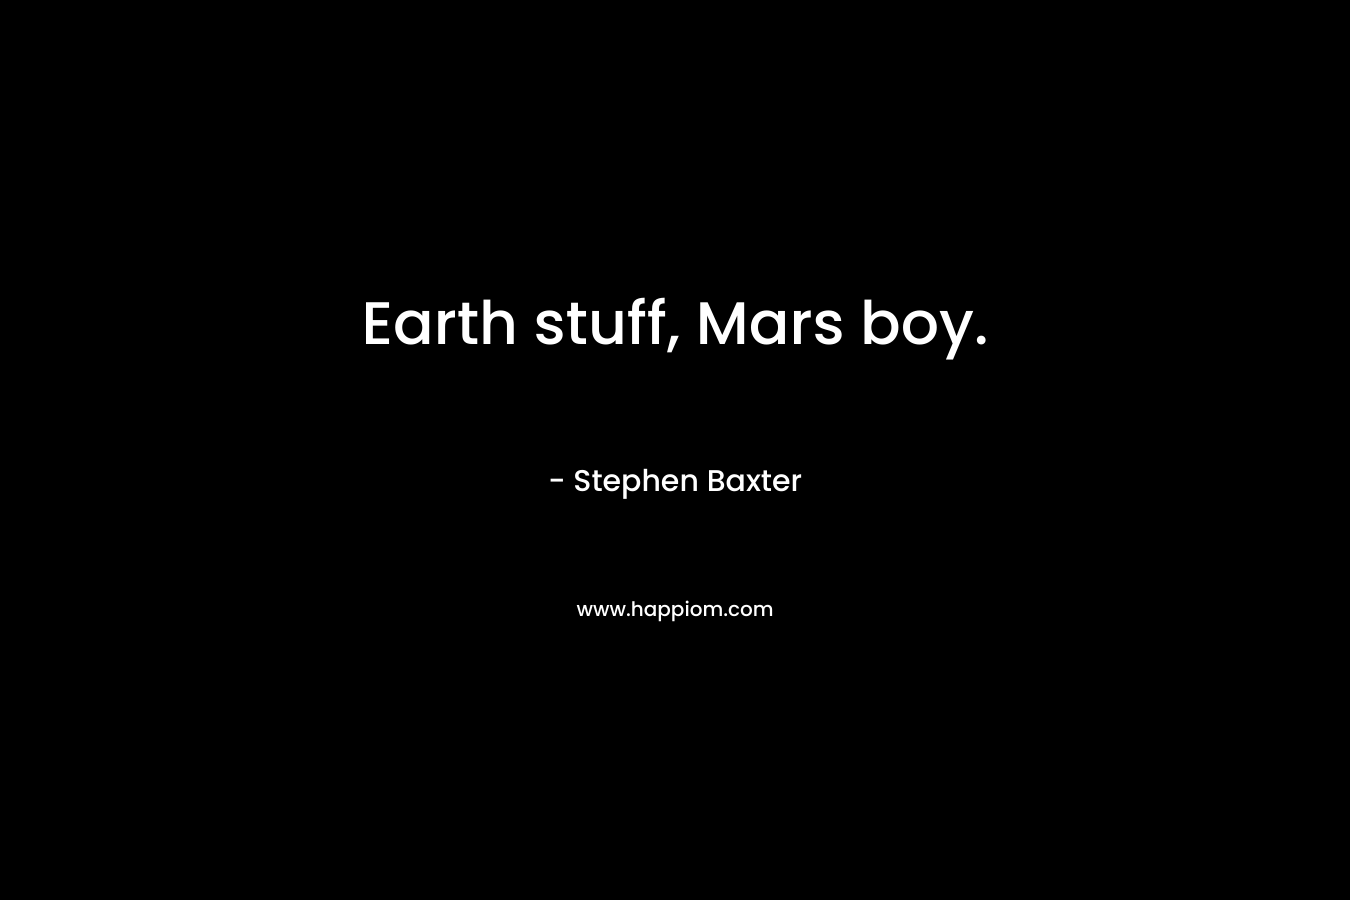 Earth stuff, Mars boy.